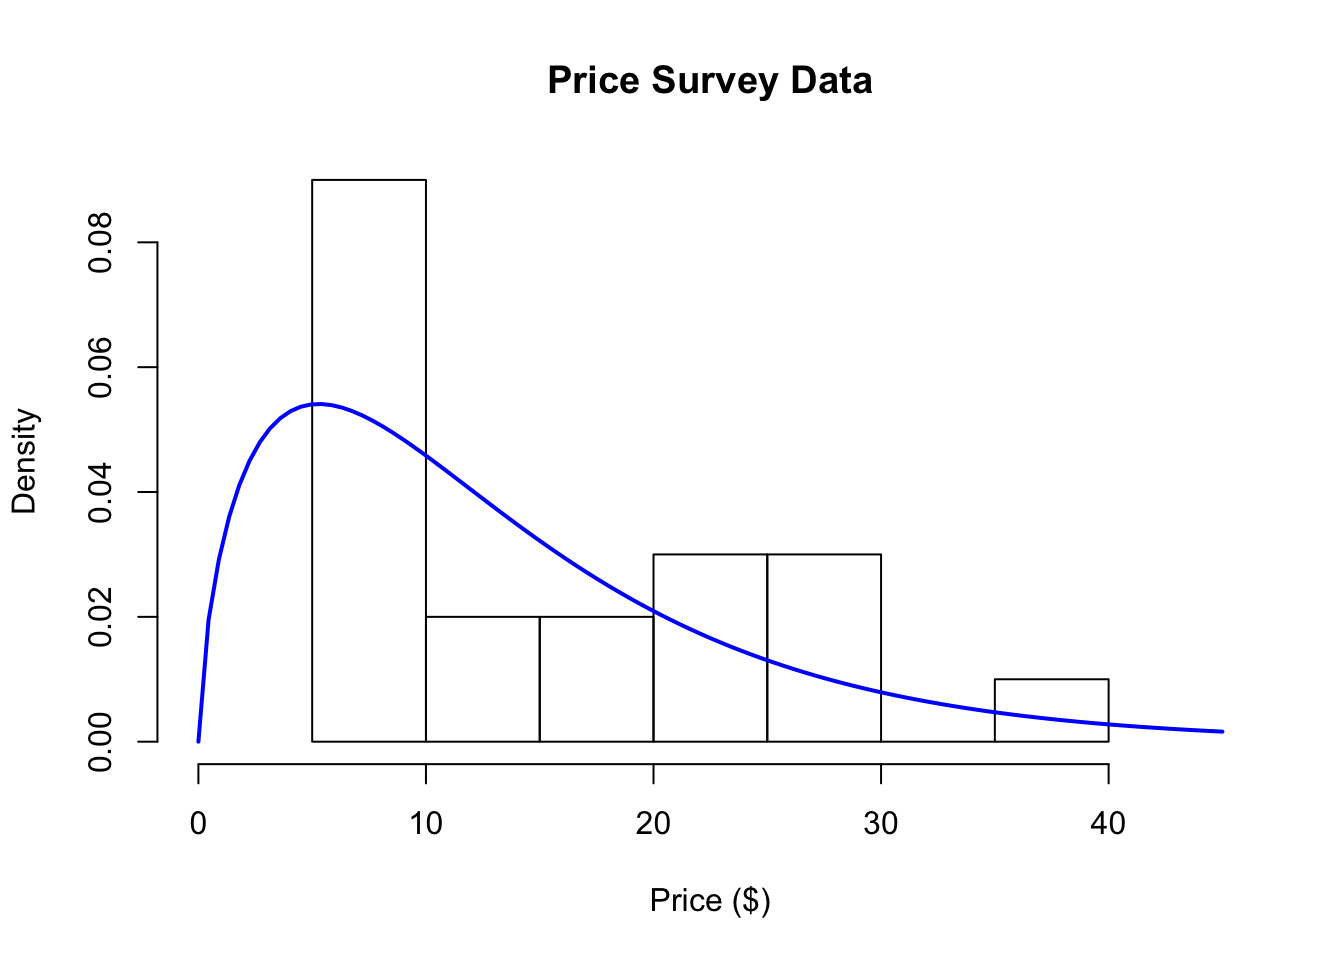 Price Survey Data with Gamma Distribution